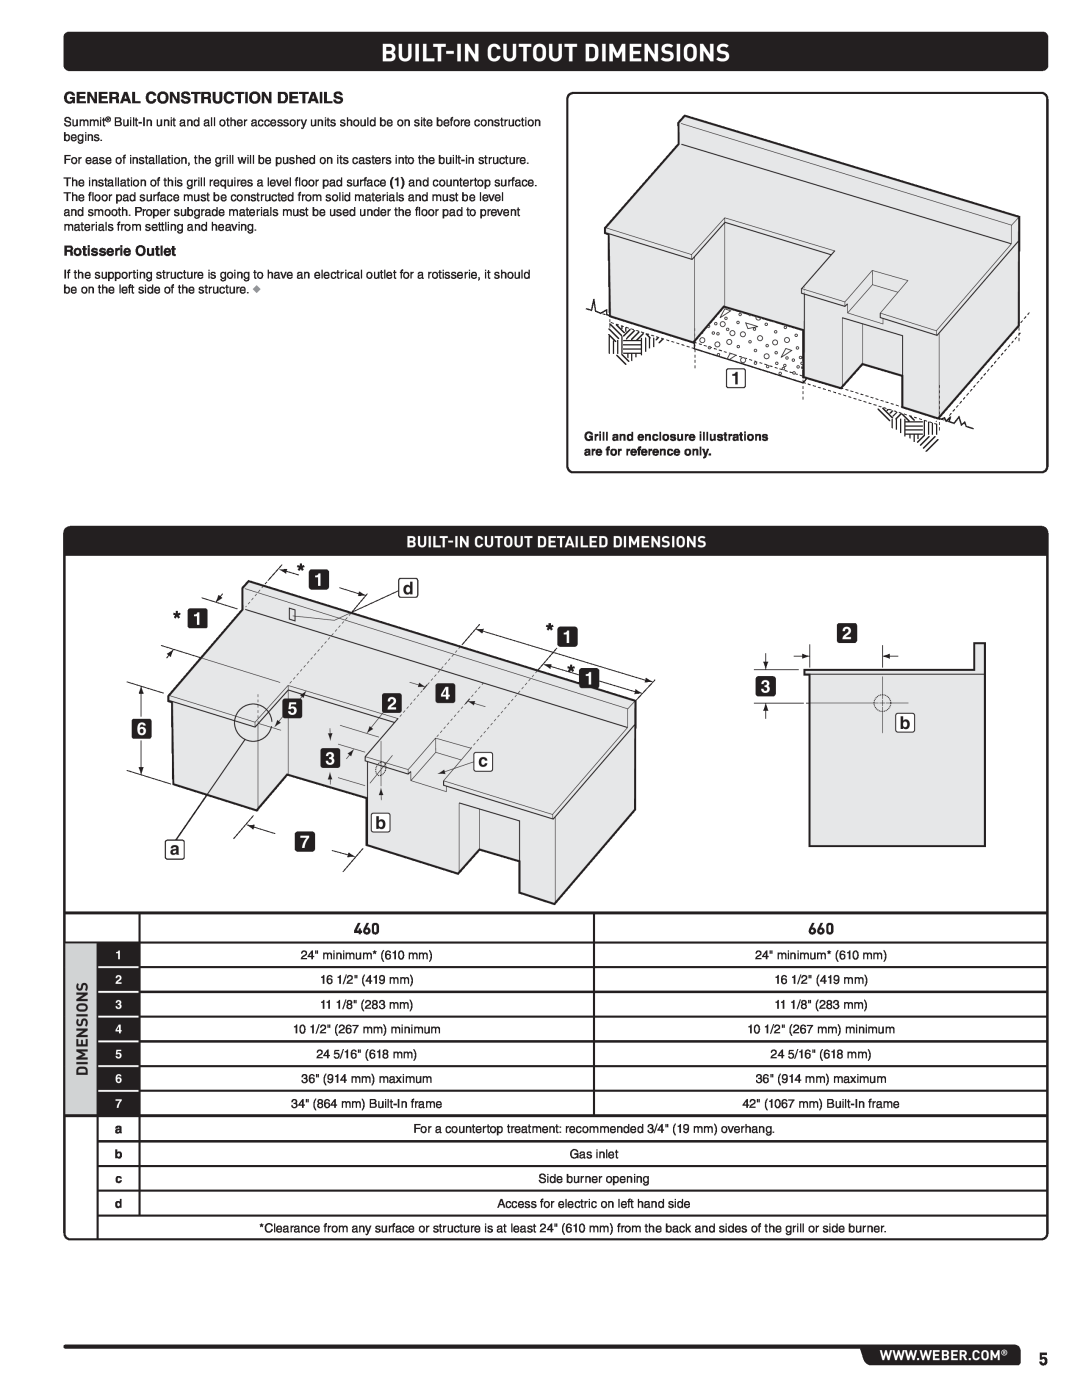 Weber 56576, Summit Gas Grill manual Built-In Cutout Dimensions, Built-In Cutout Detailed Dimensions, b c d 